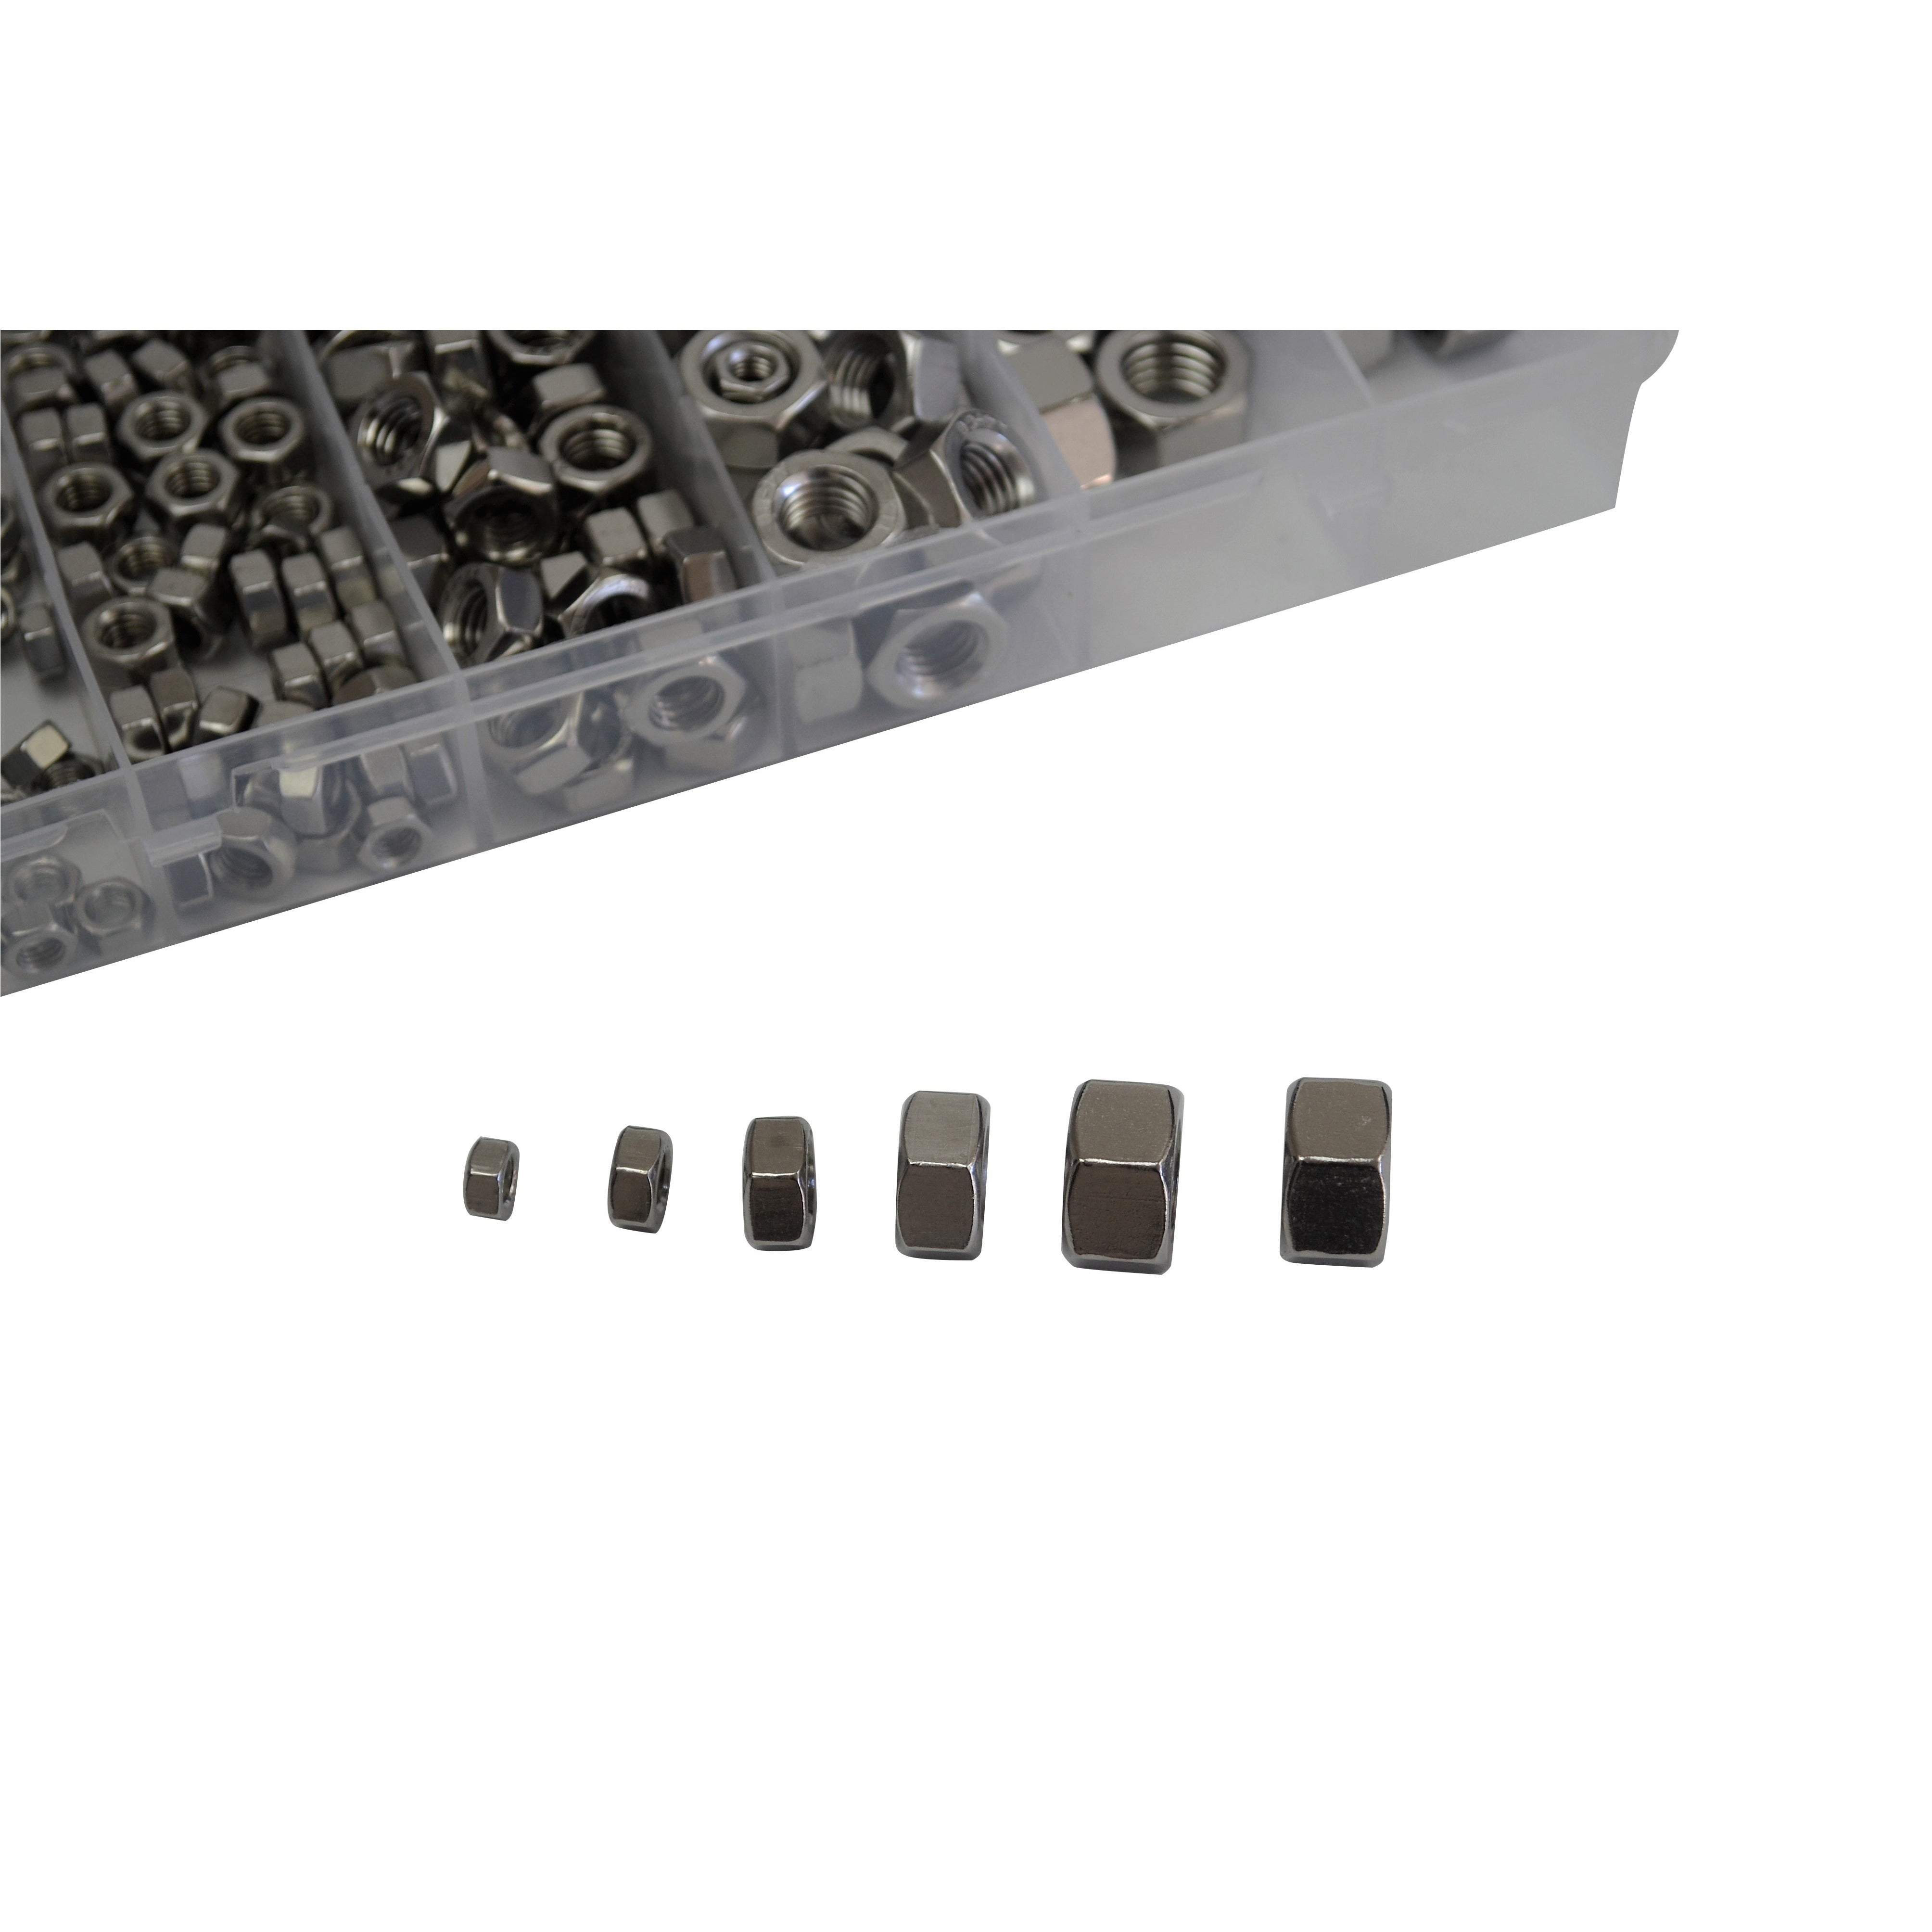 190 piece 316 Stainless Steel Metric UNC Hex Nut Grab Kit Assortment